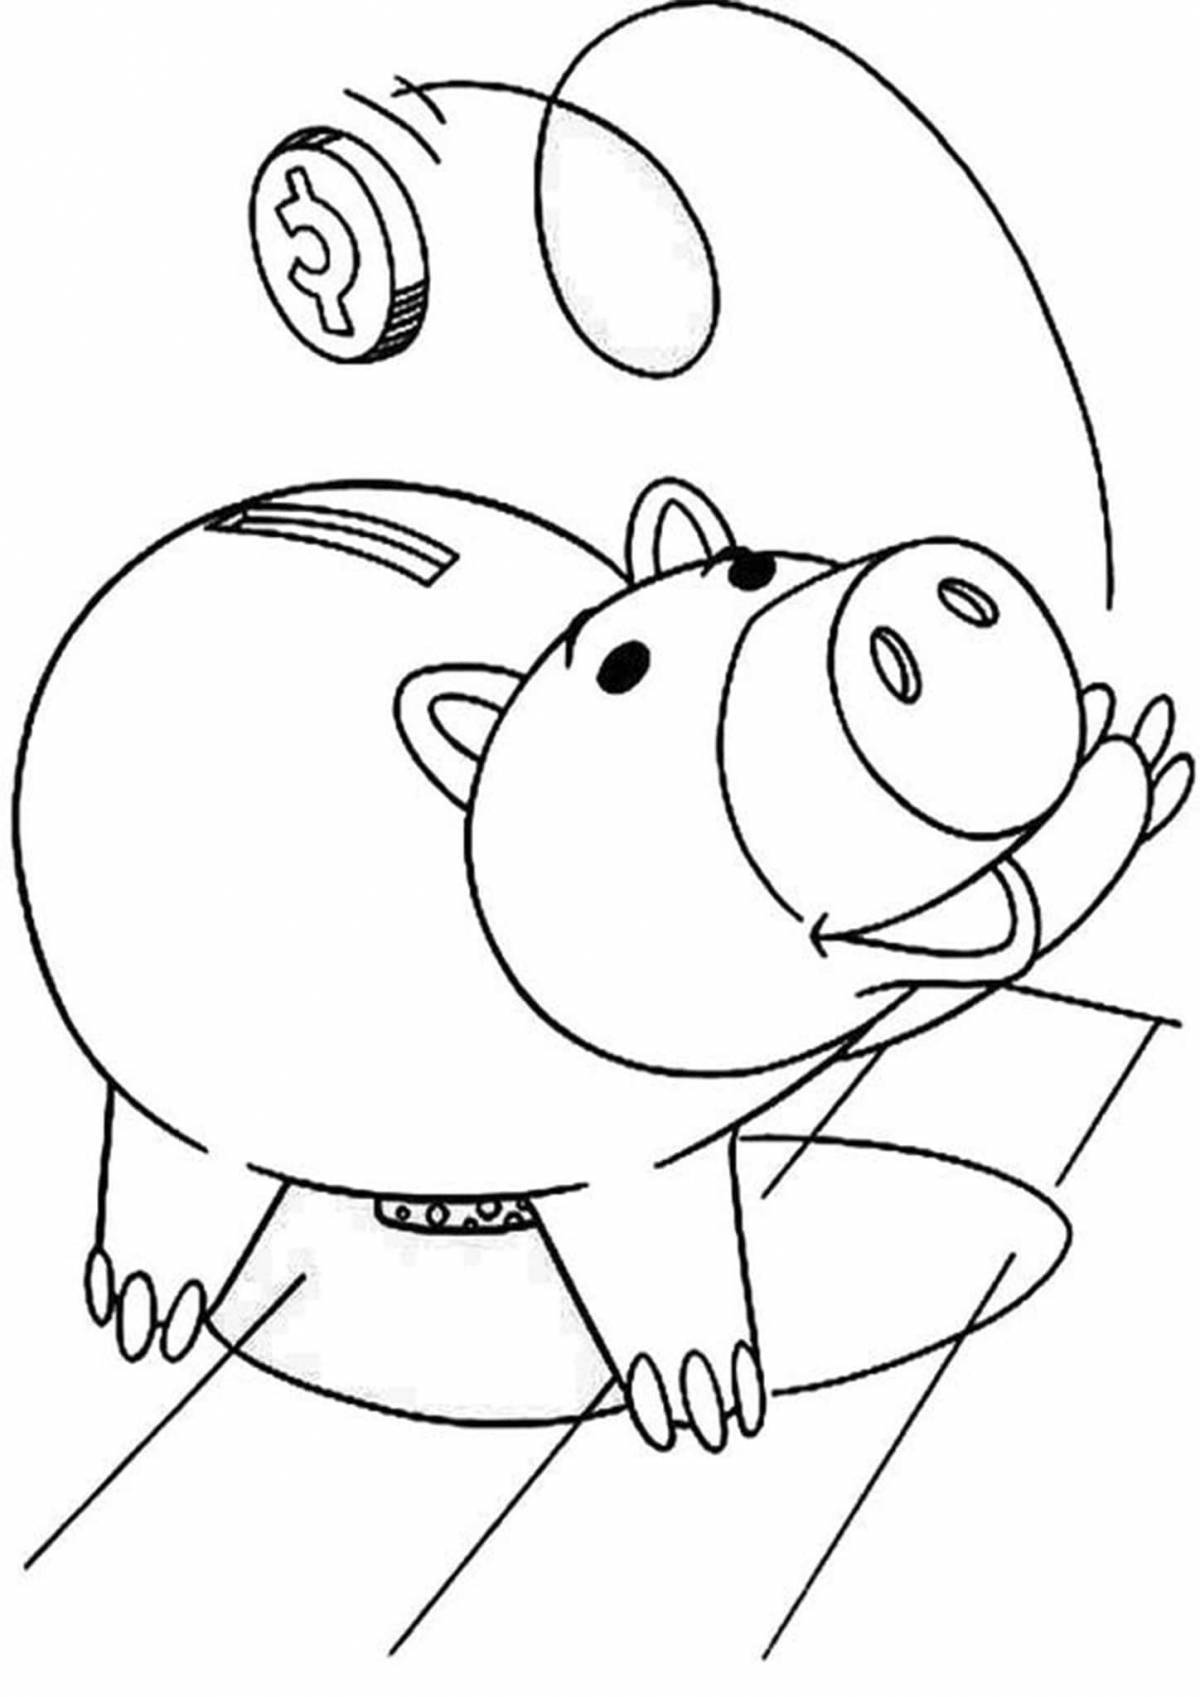 Joyful pig coloring